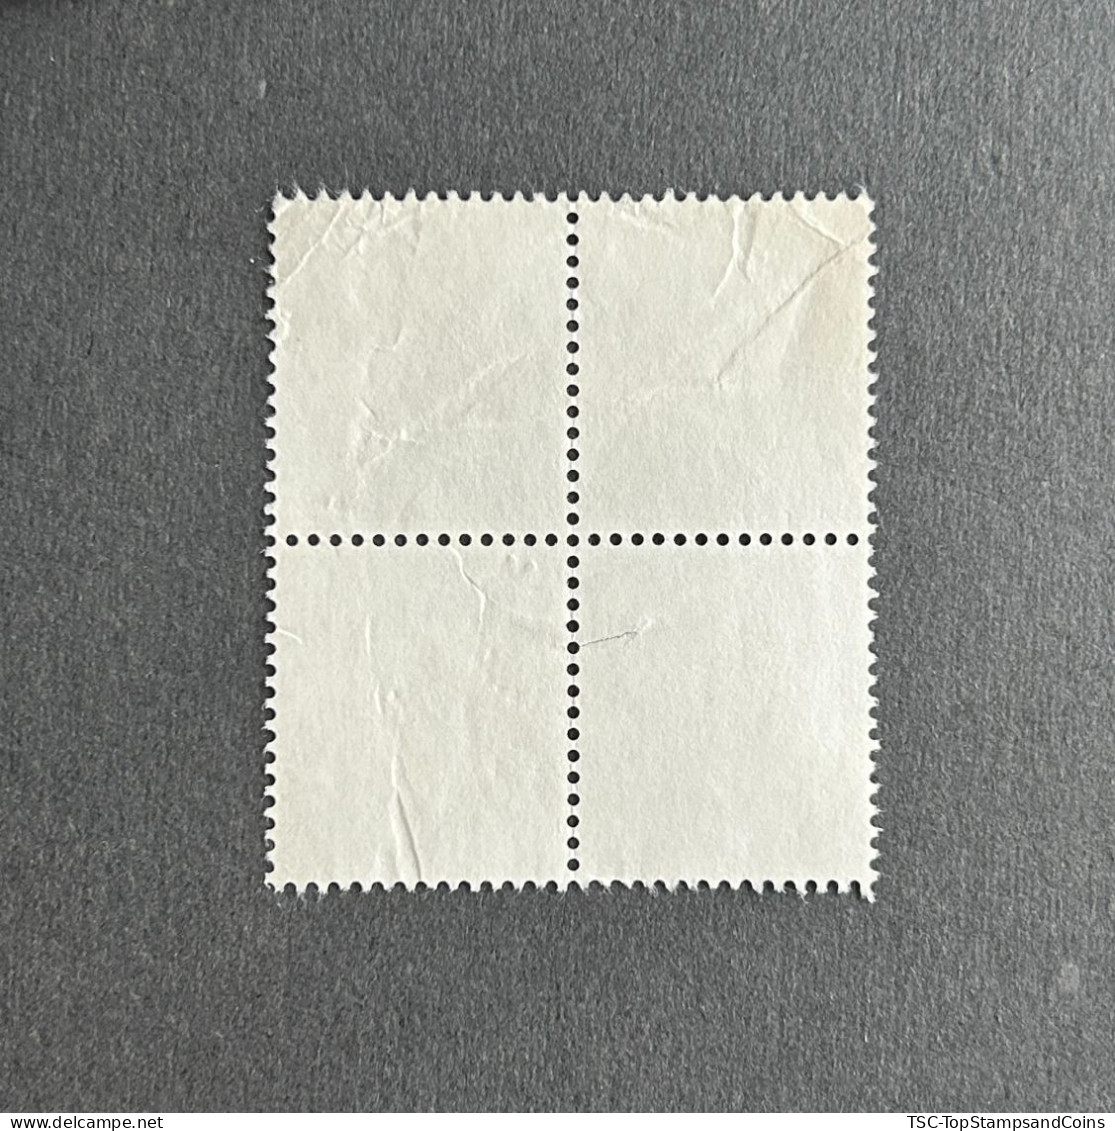 BEL1068UAx4BS - King Baudouin - Block Of 4 X 4.50 F Used Stamps - Belgium - 1962 - 1953-1972 Occhiali